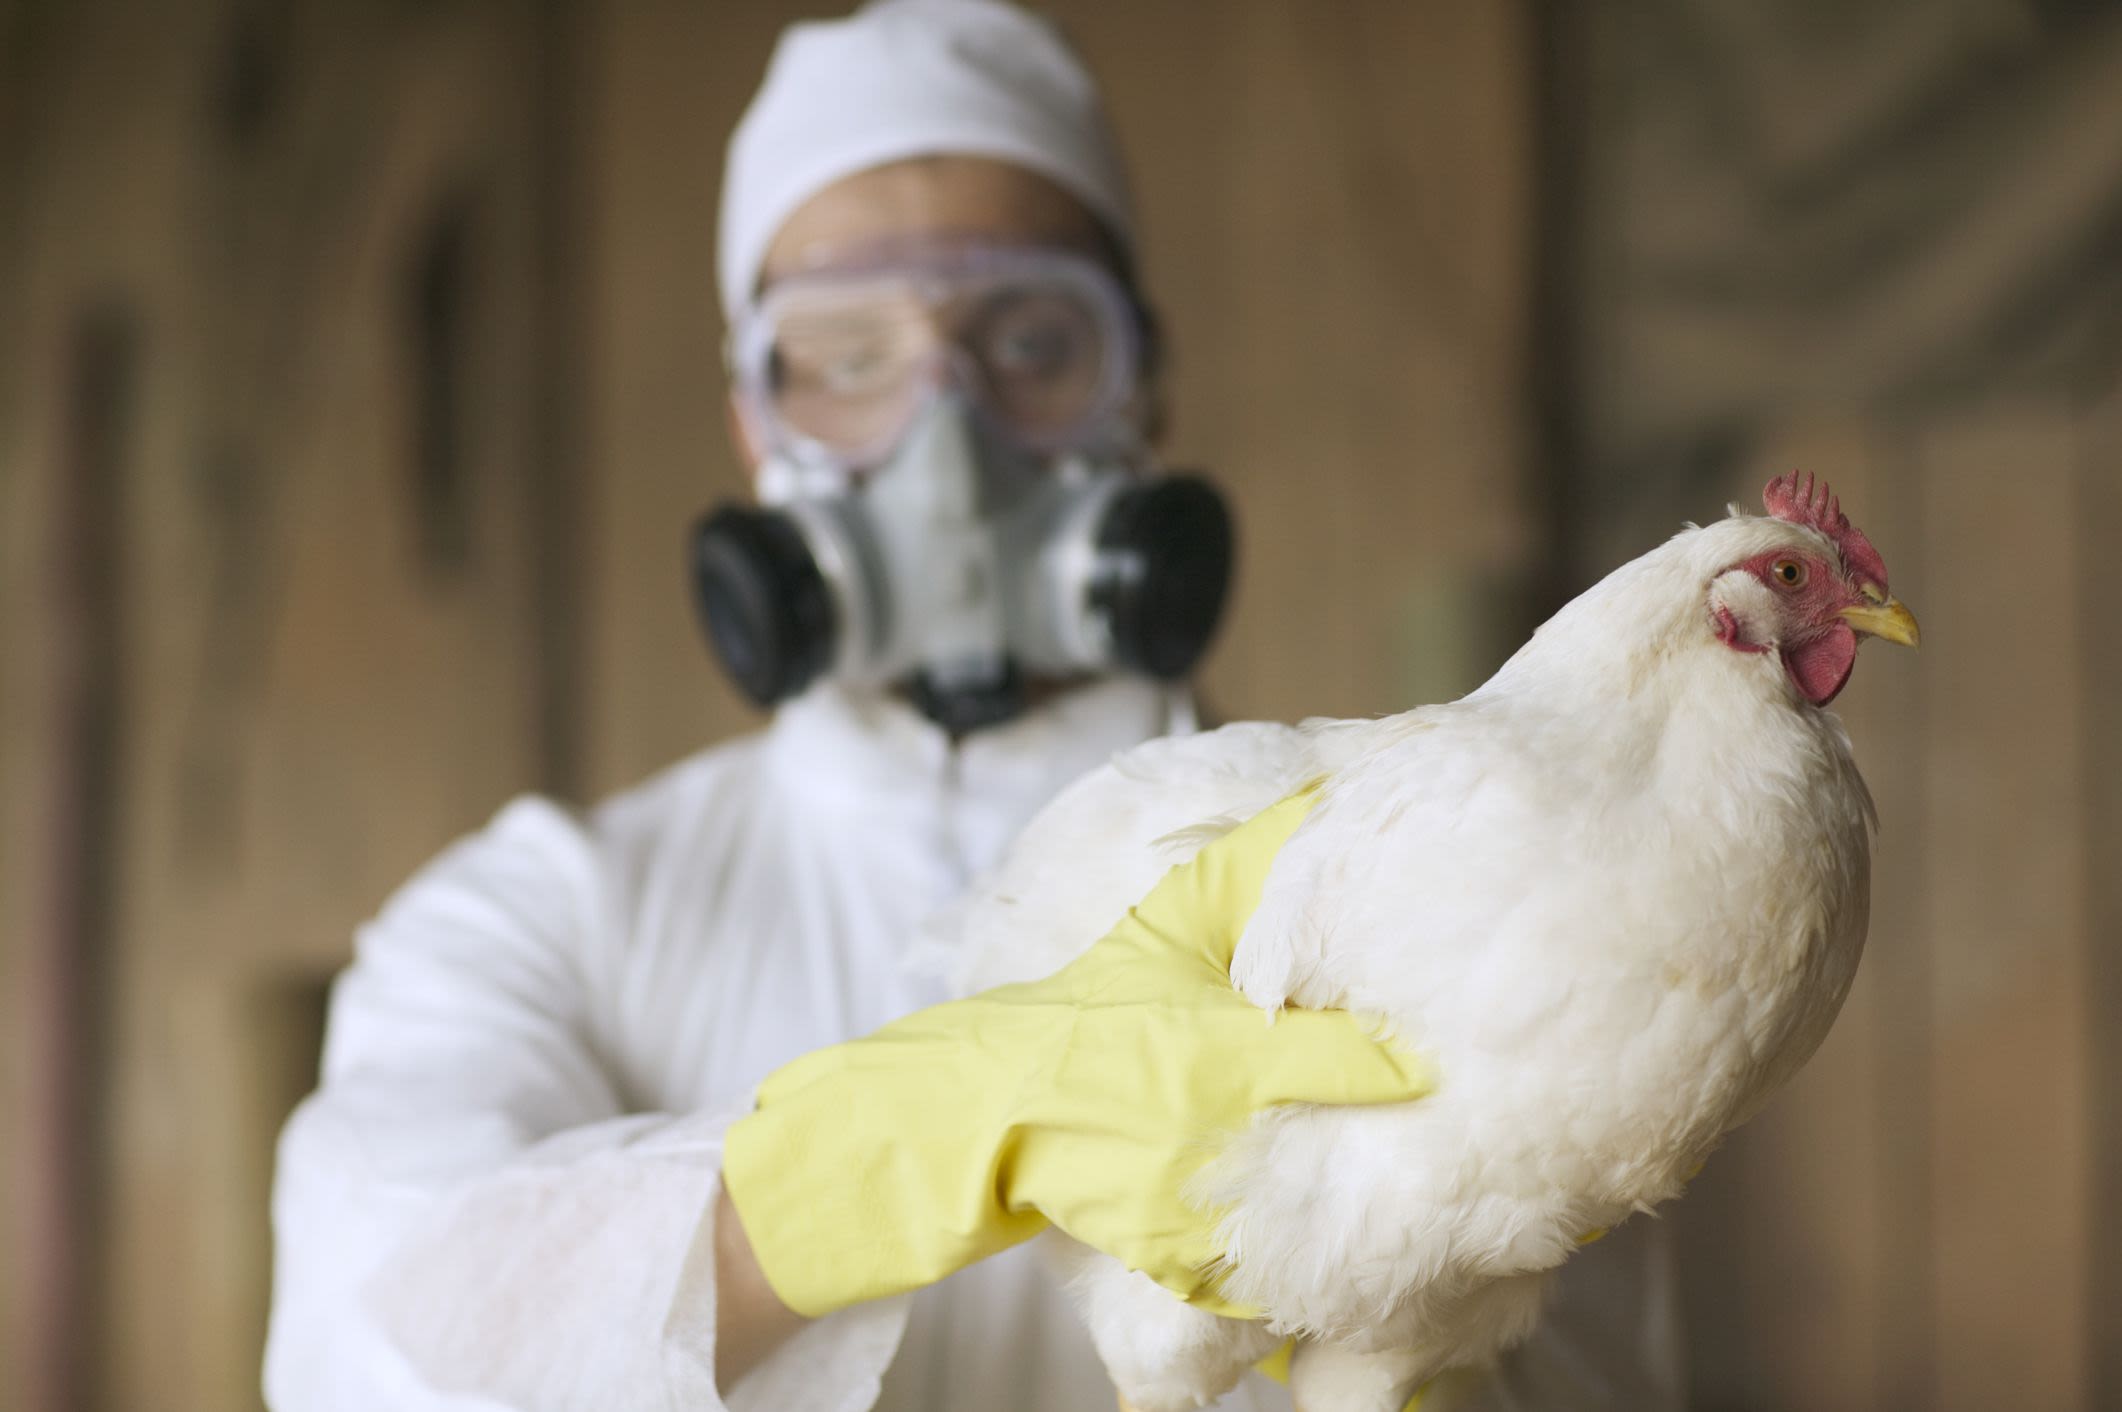 First Human Dies from New Bird Flu Strain, World Health Organization Confirms